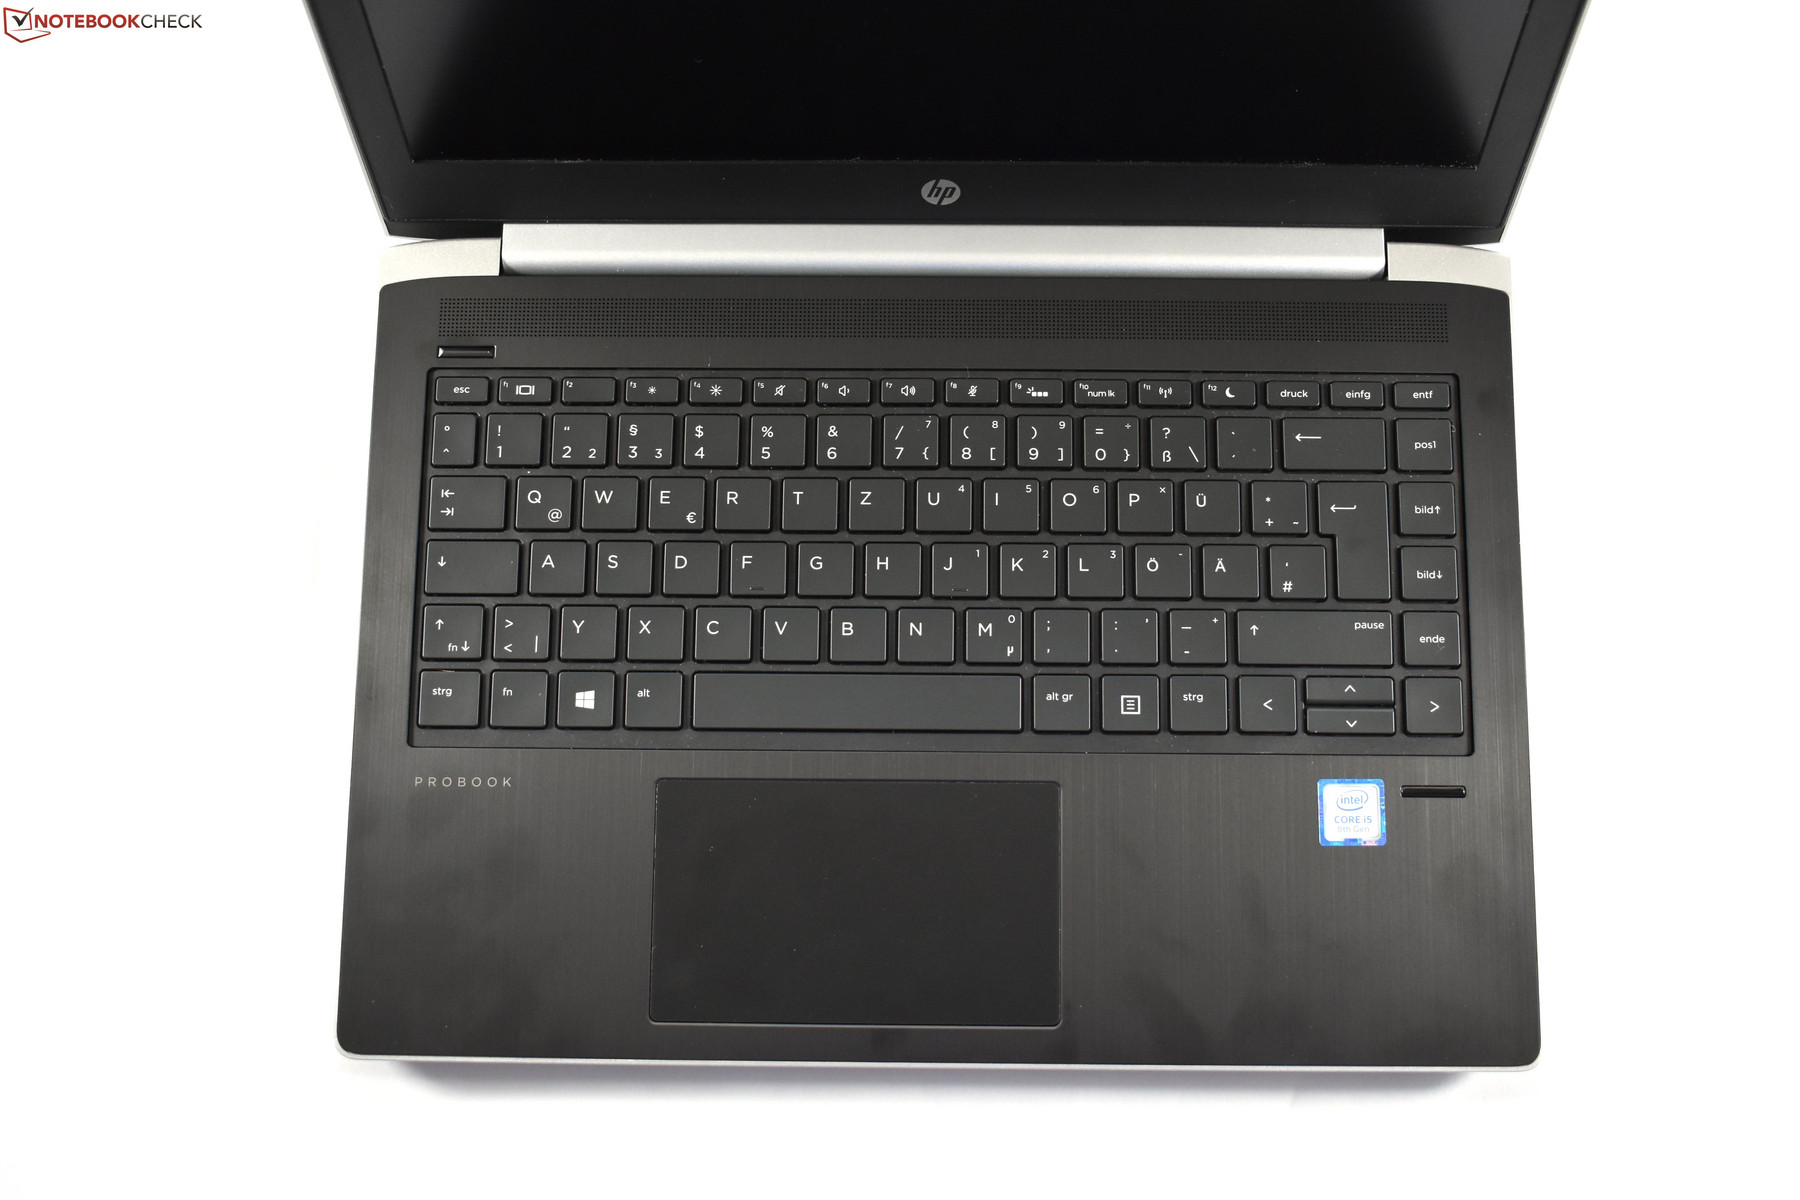 Munching Dubbelzinnig Veronderstelling HP ProBook 430 G5 (i5-8250U, FHD) Laptop Review - NotebookCheck.net Reviews